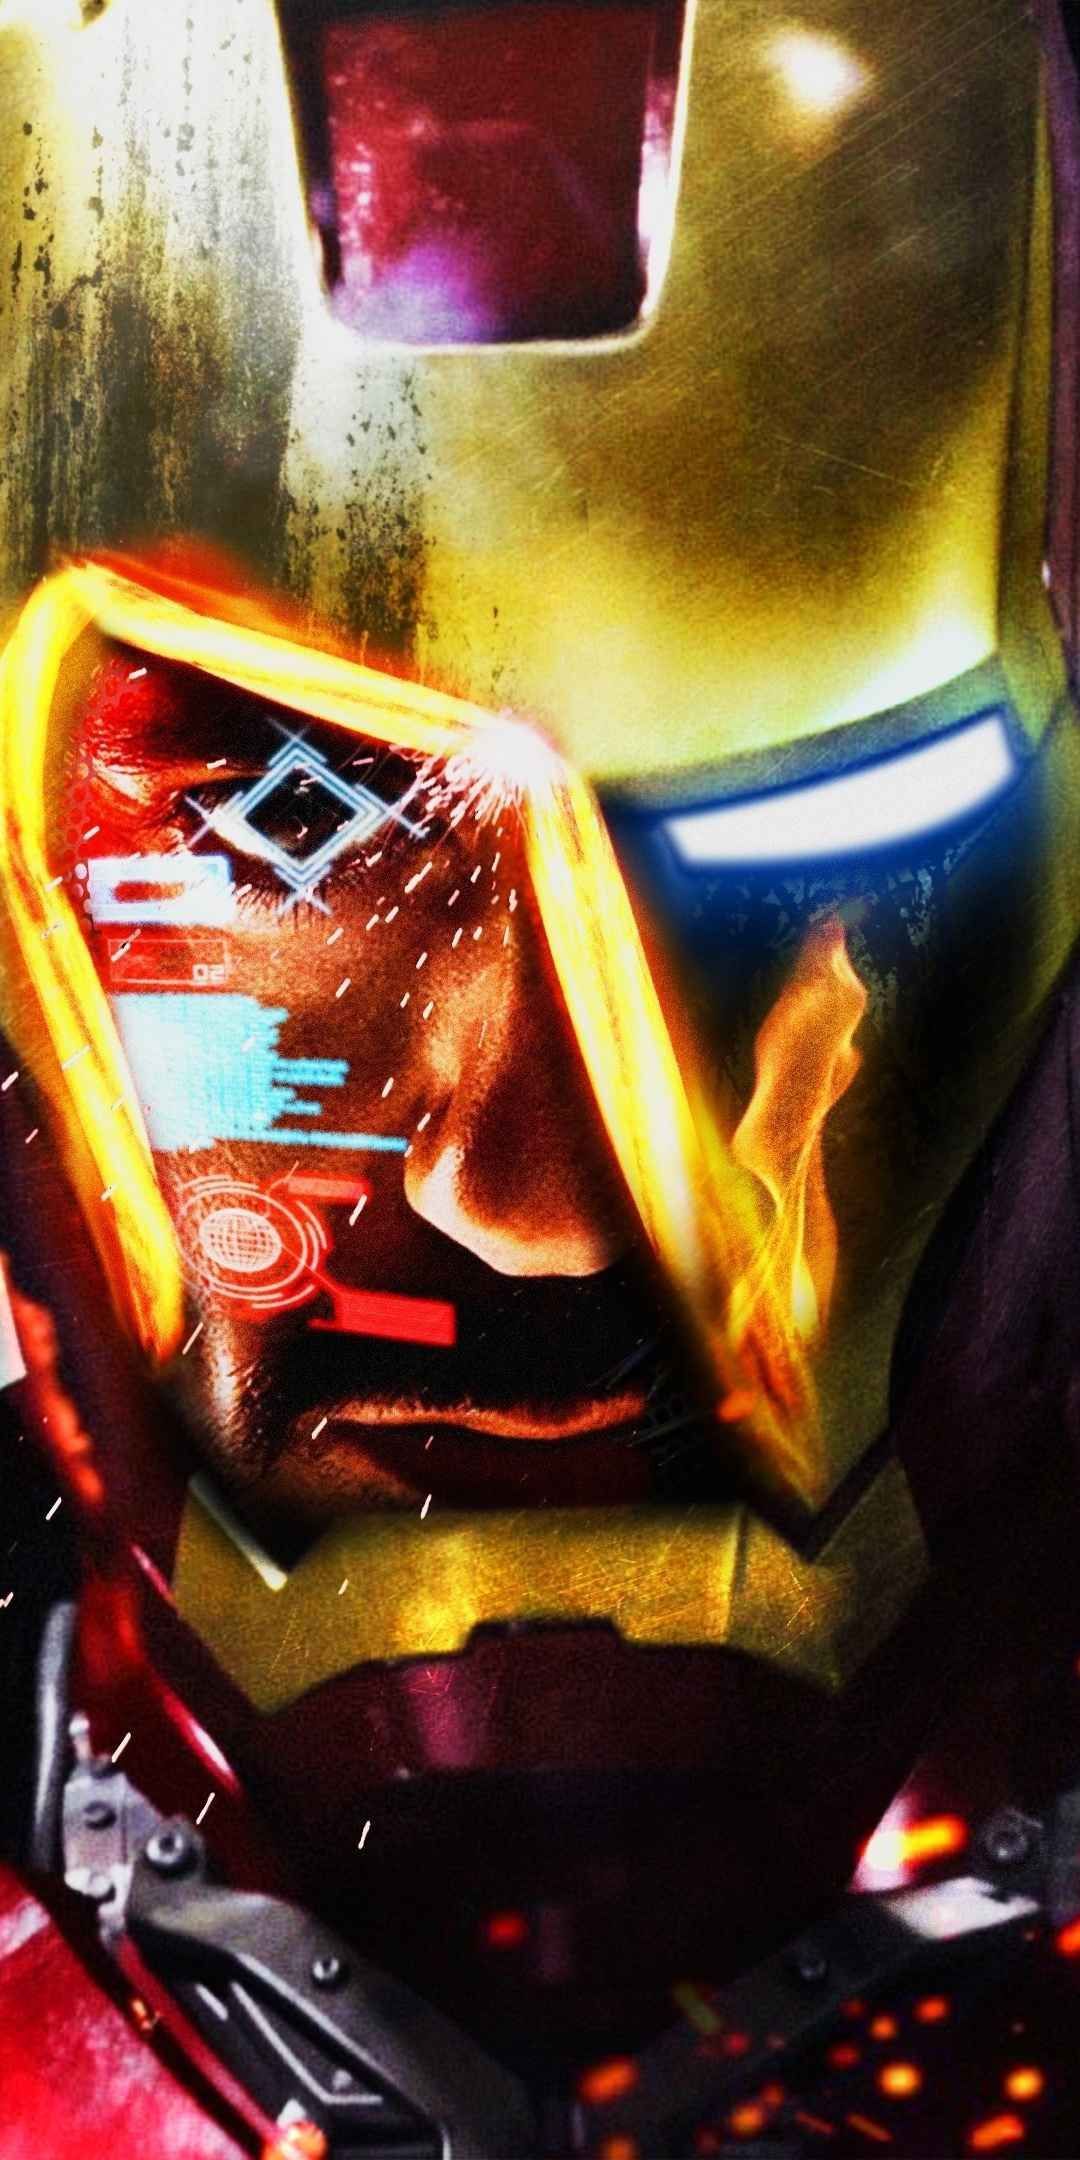 Iron Man Helmet Art IPhone Wallpaper. Iron man HD wallpaper, Iron man helmet, Iron man wallpaper